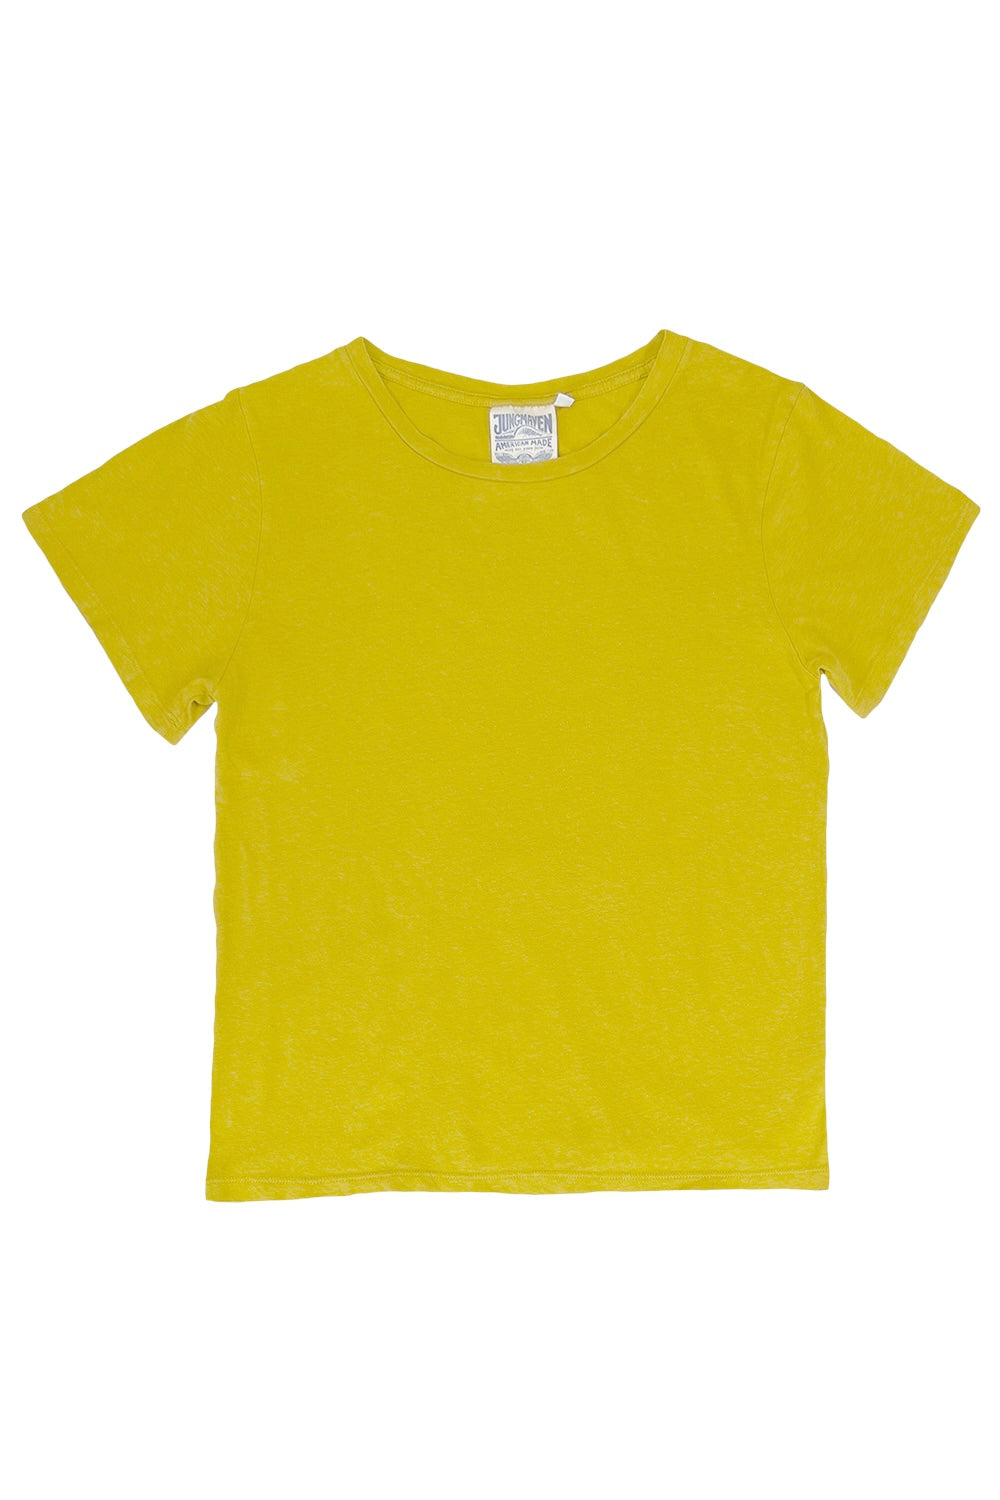 Ojai Tee | Jungmaven Hemp Clothing & Accessories / Color:Citrine Yellow